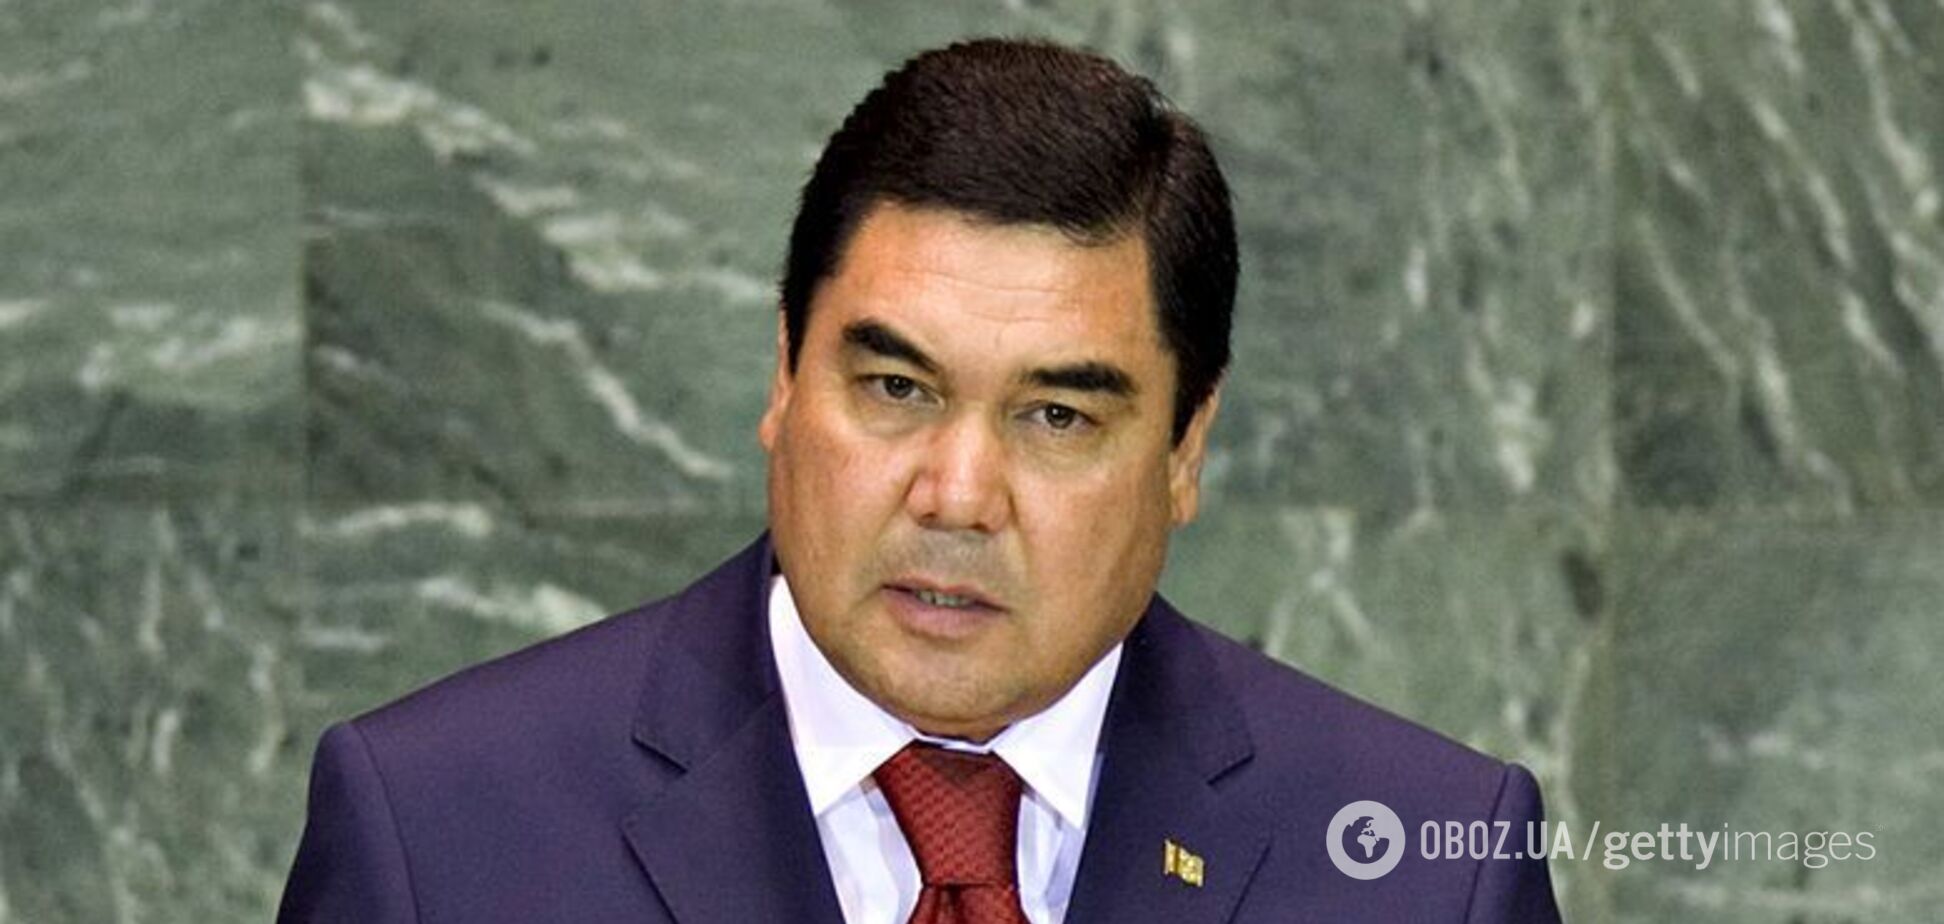 'Прикована к кровати!' Появилась новая версия 'смерти' президента Туркменистана